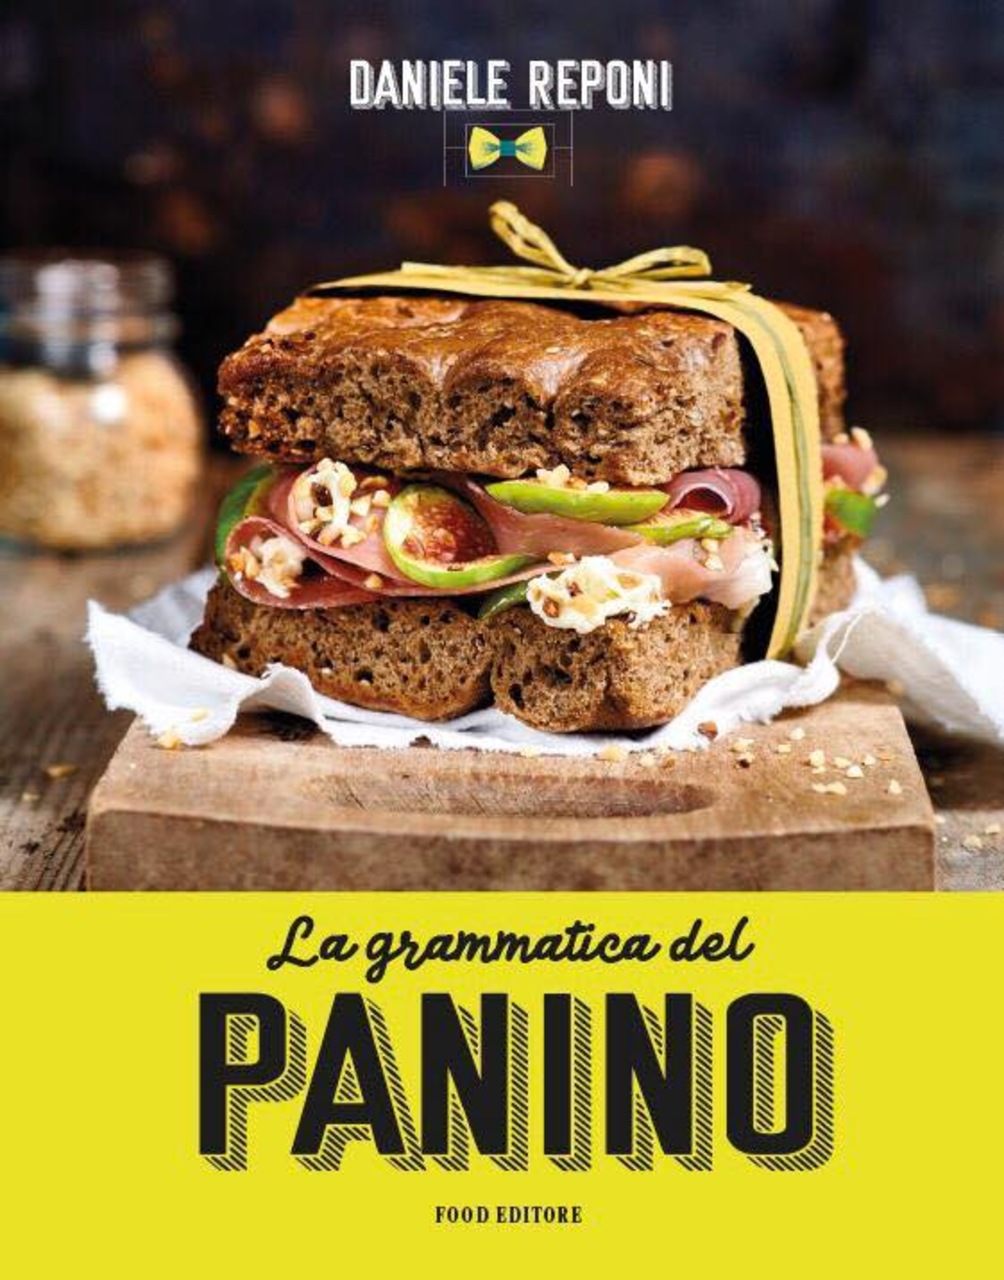 Ceapaire gourmet: clúdach an leabhair "The grammar of the sandwich" le Daniele Reponi